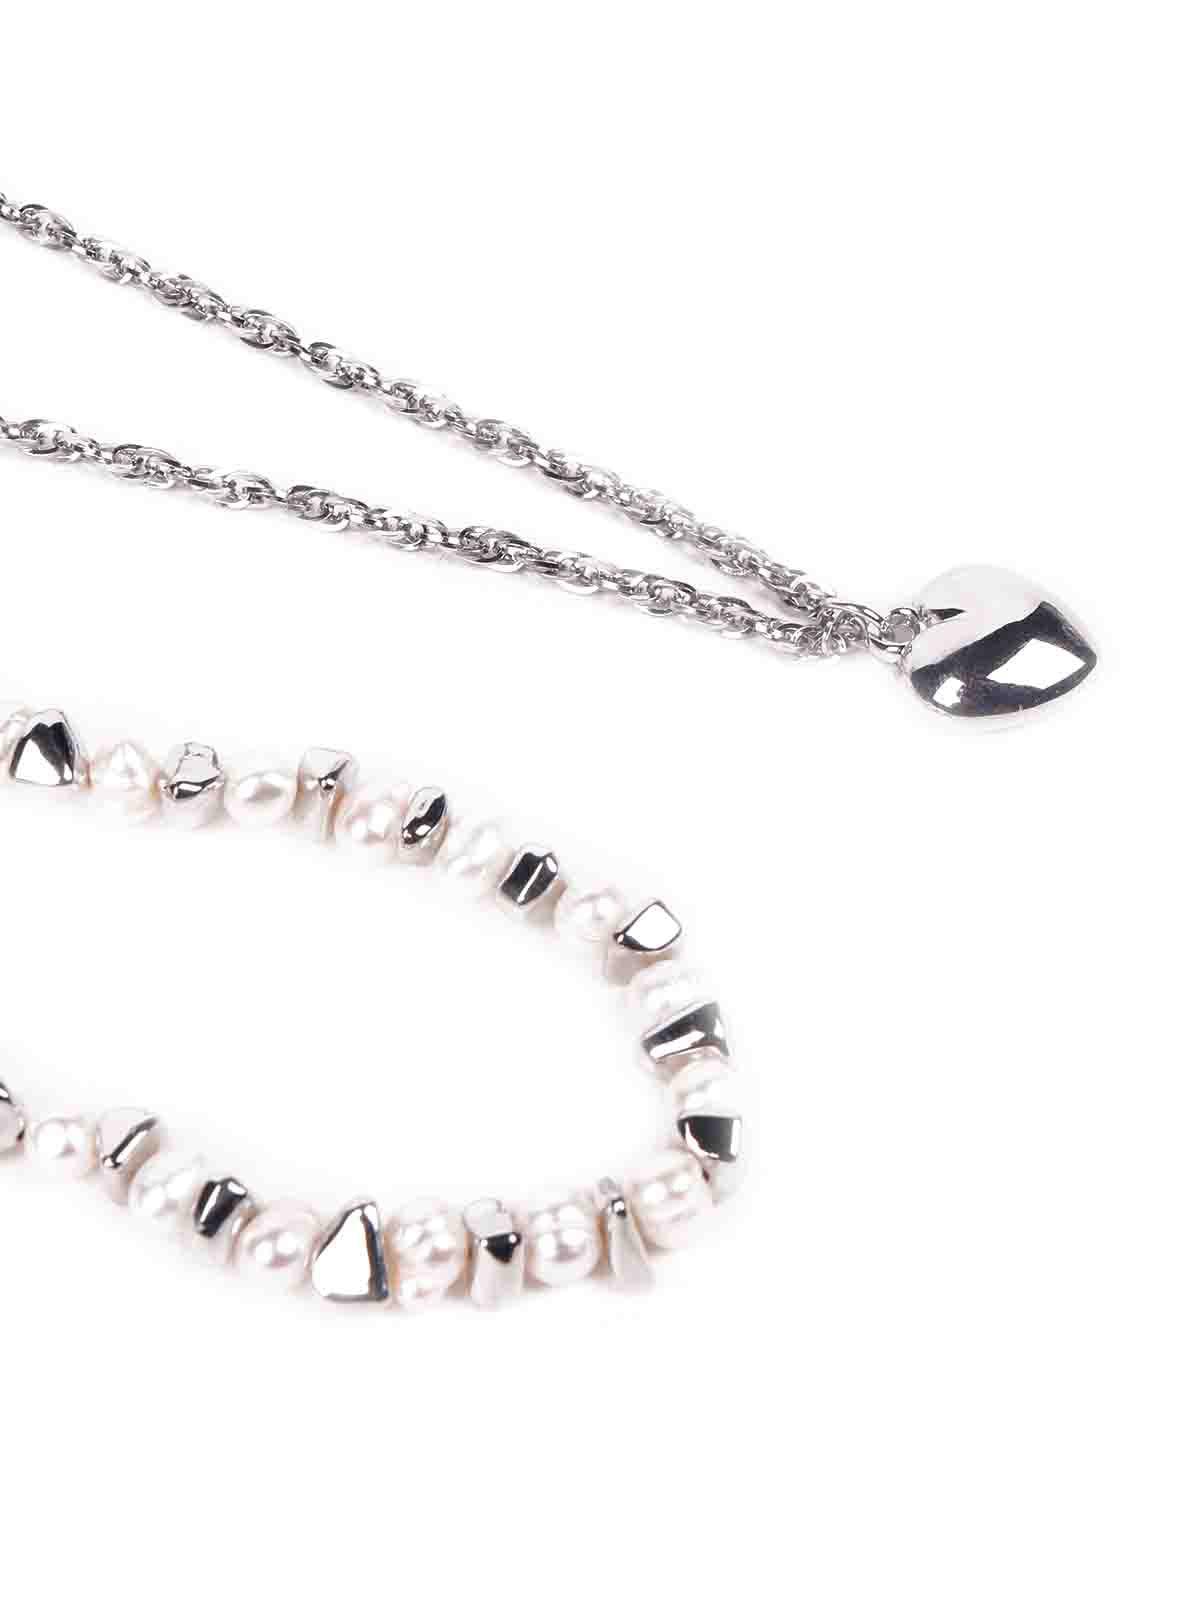 Exquisite silver two-piece necklace set - Odette